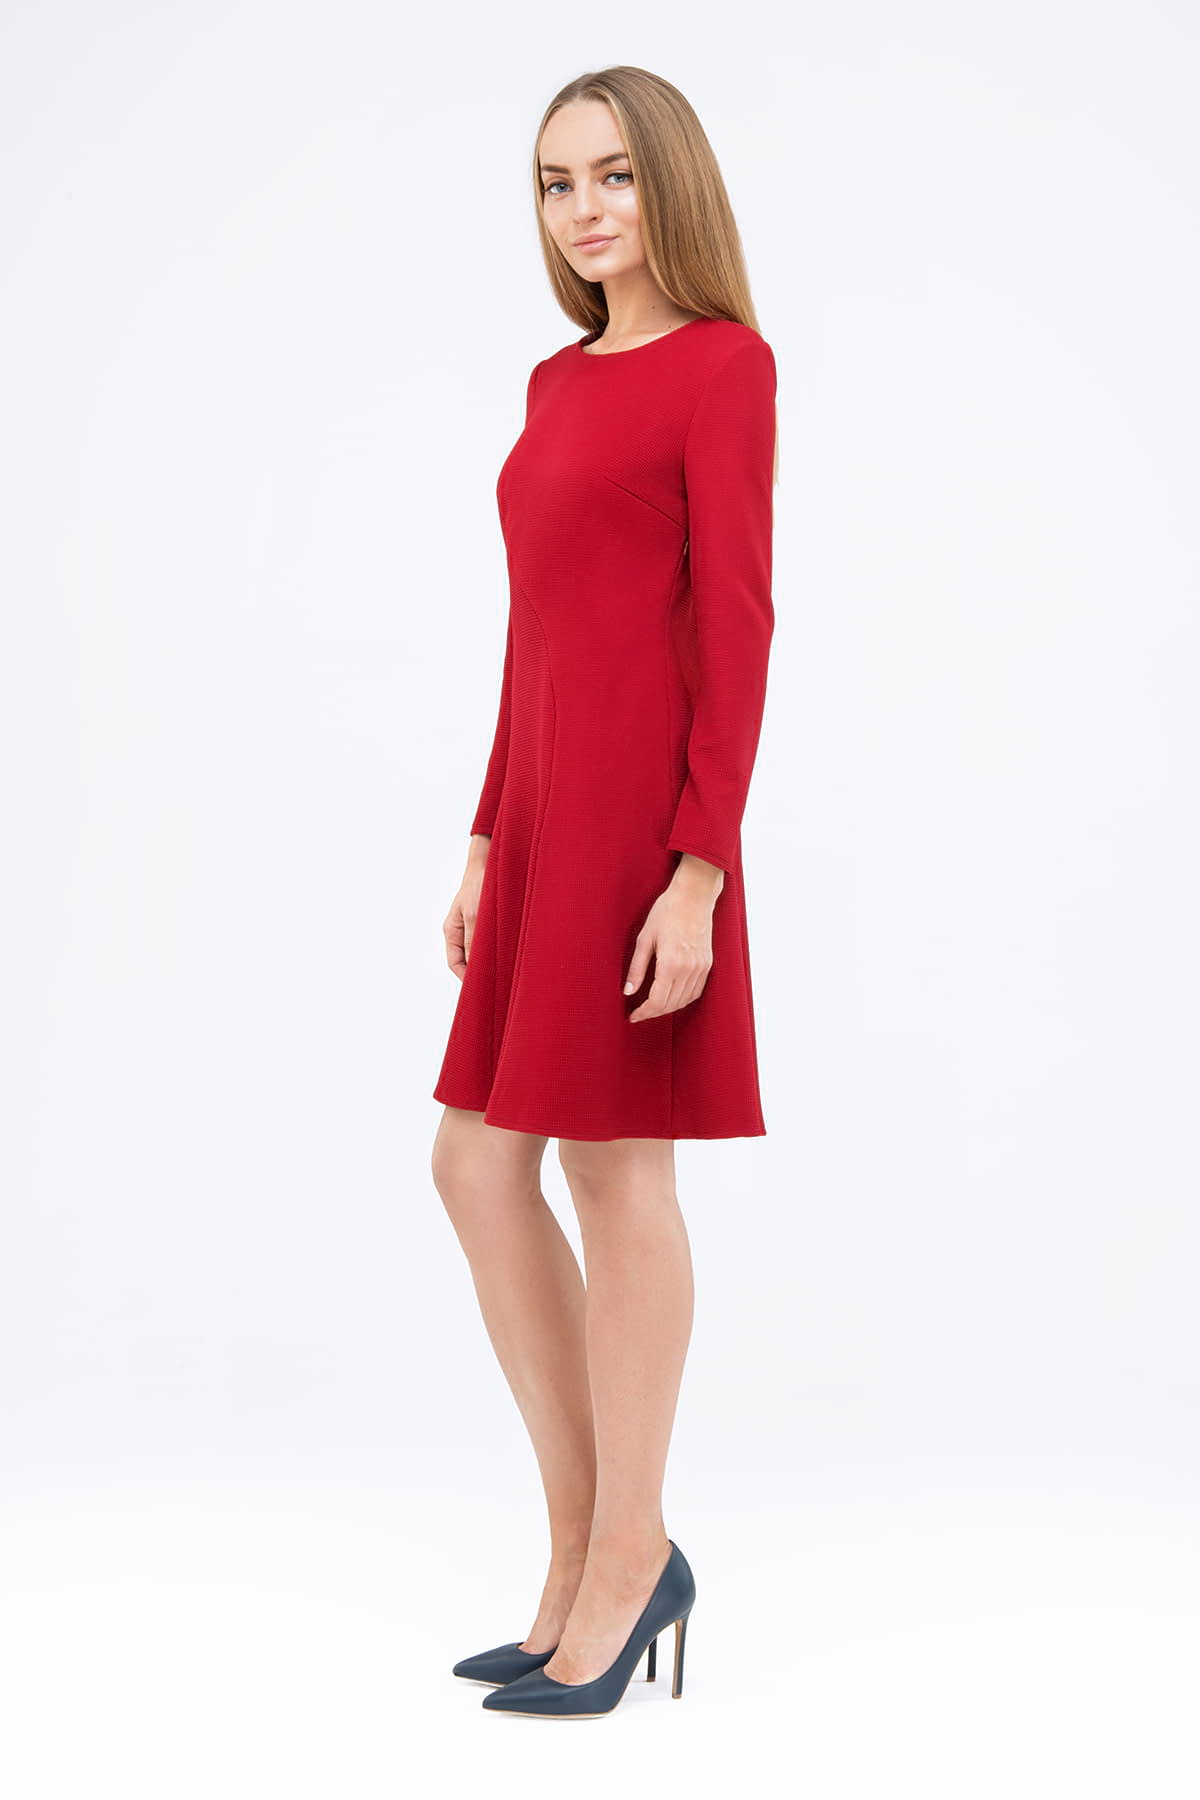 Red A-line dress , photo 3